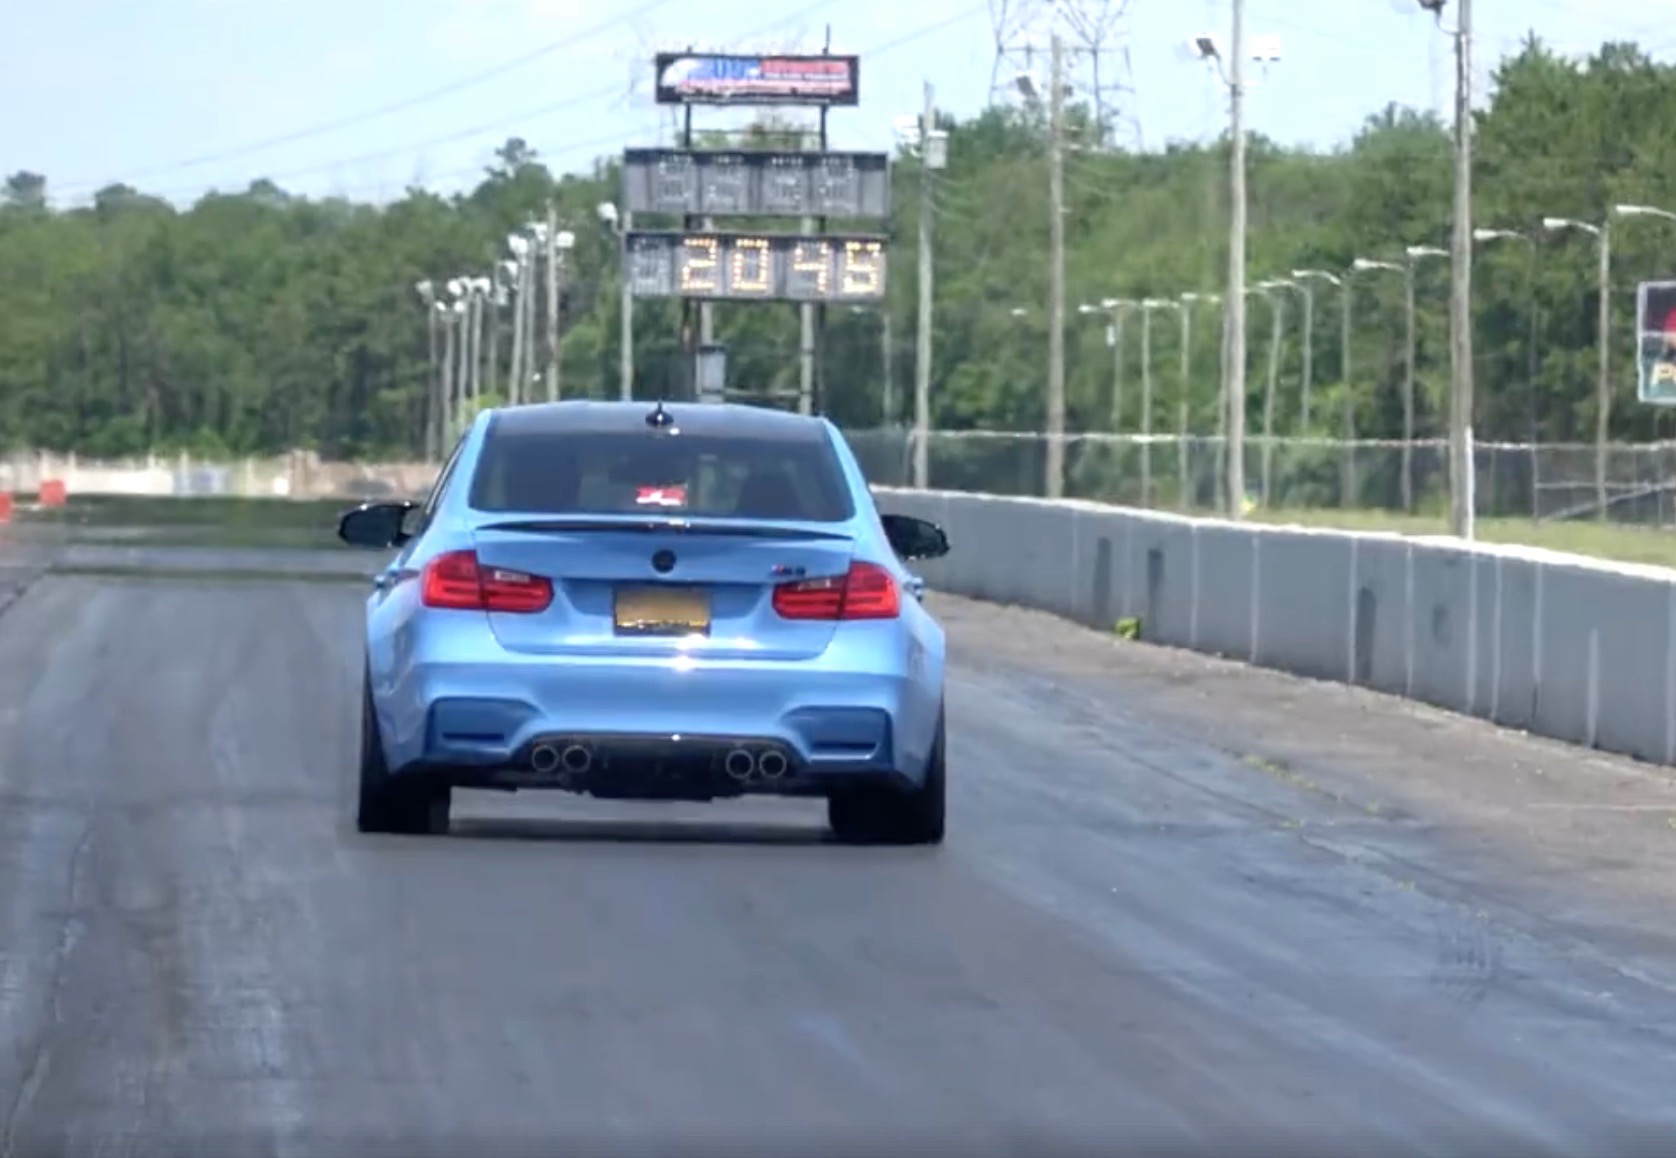 BMW M3 F80 sets world record quarter mile (video)